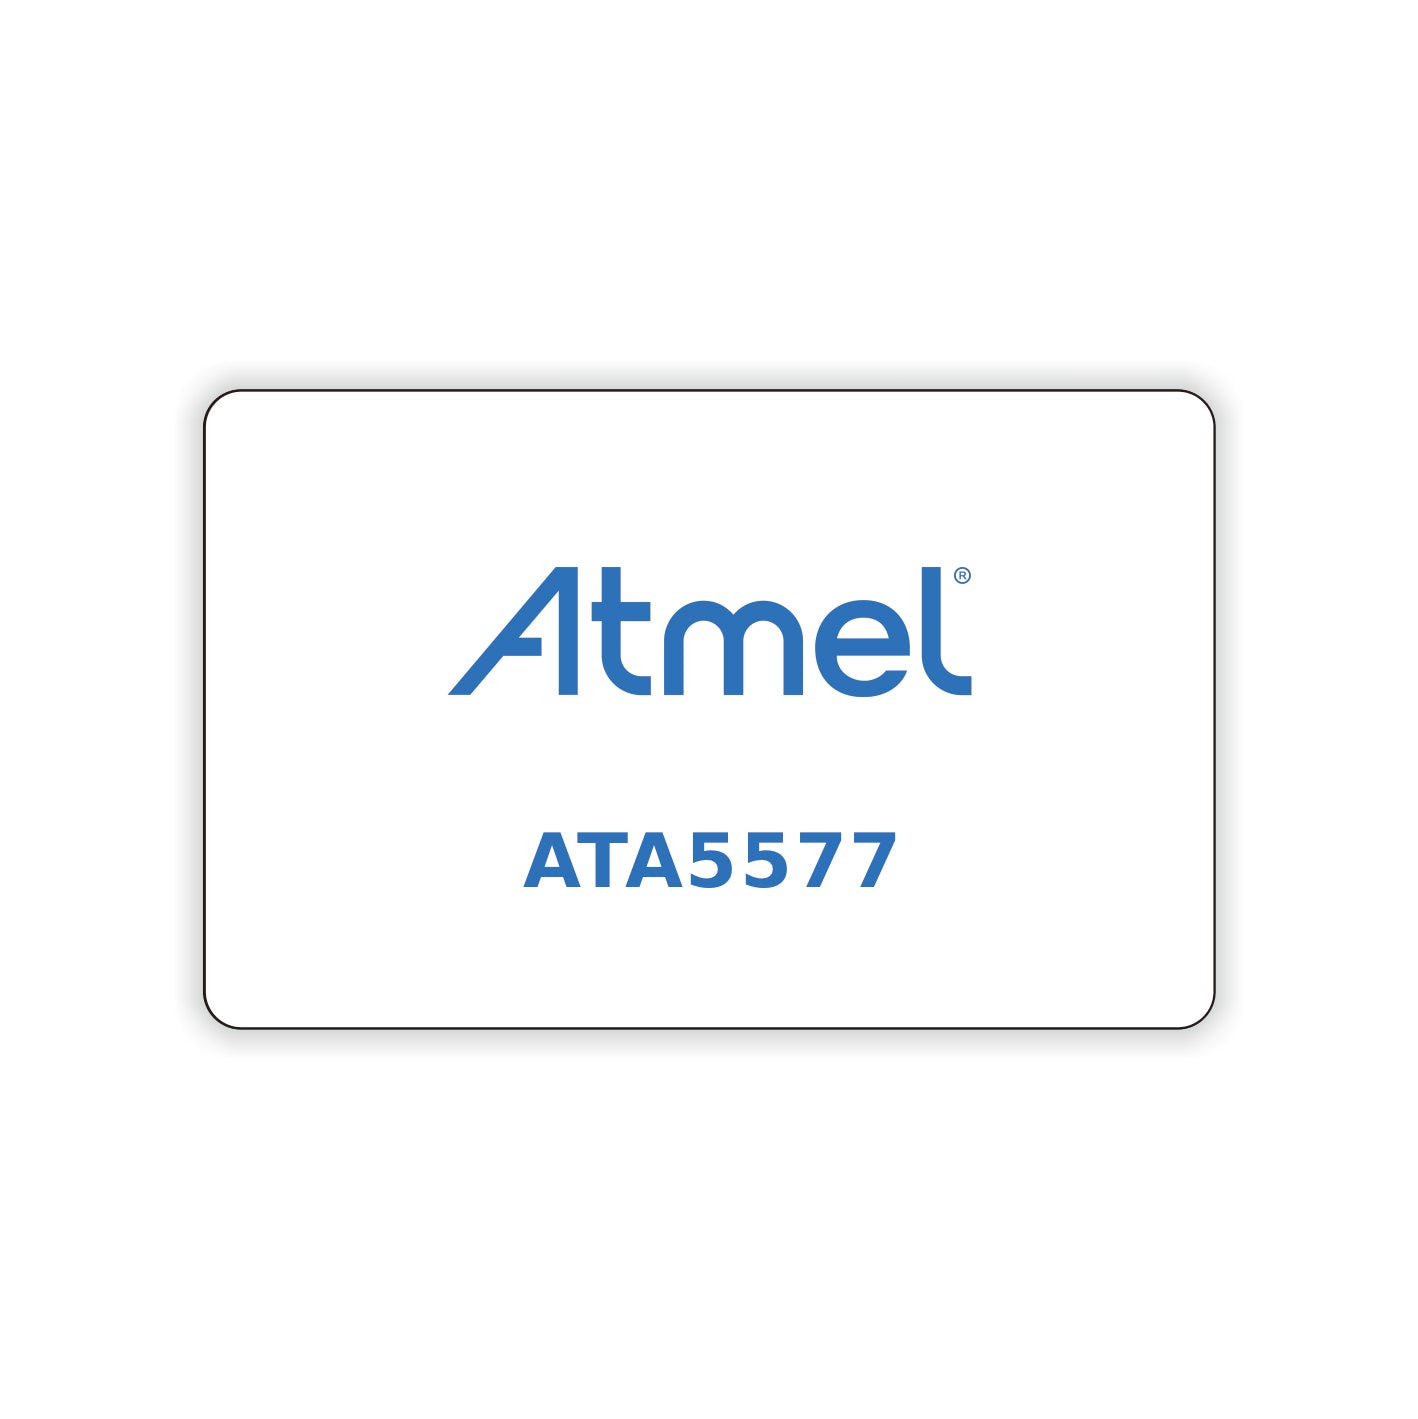 ATA5577 Card From Atmel Company Temic T5577 Card